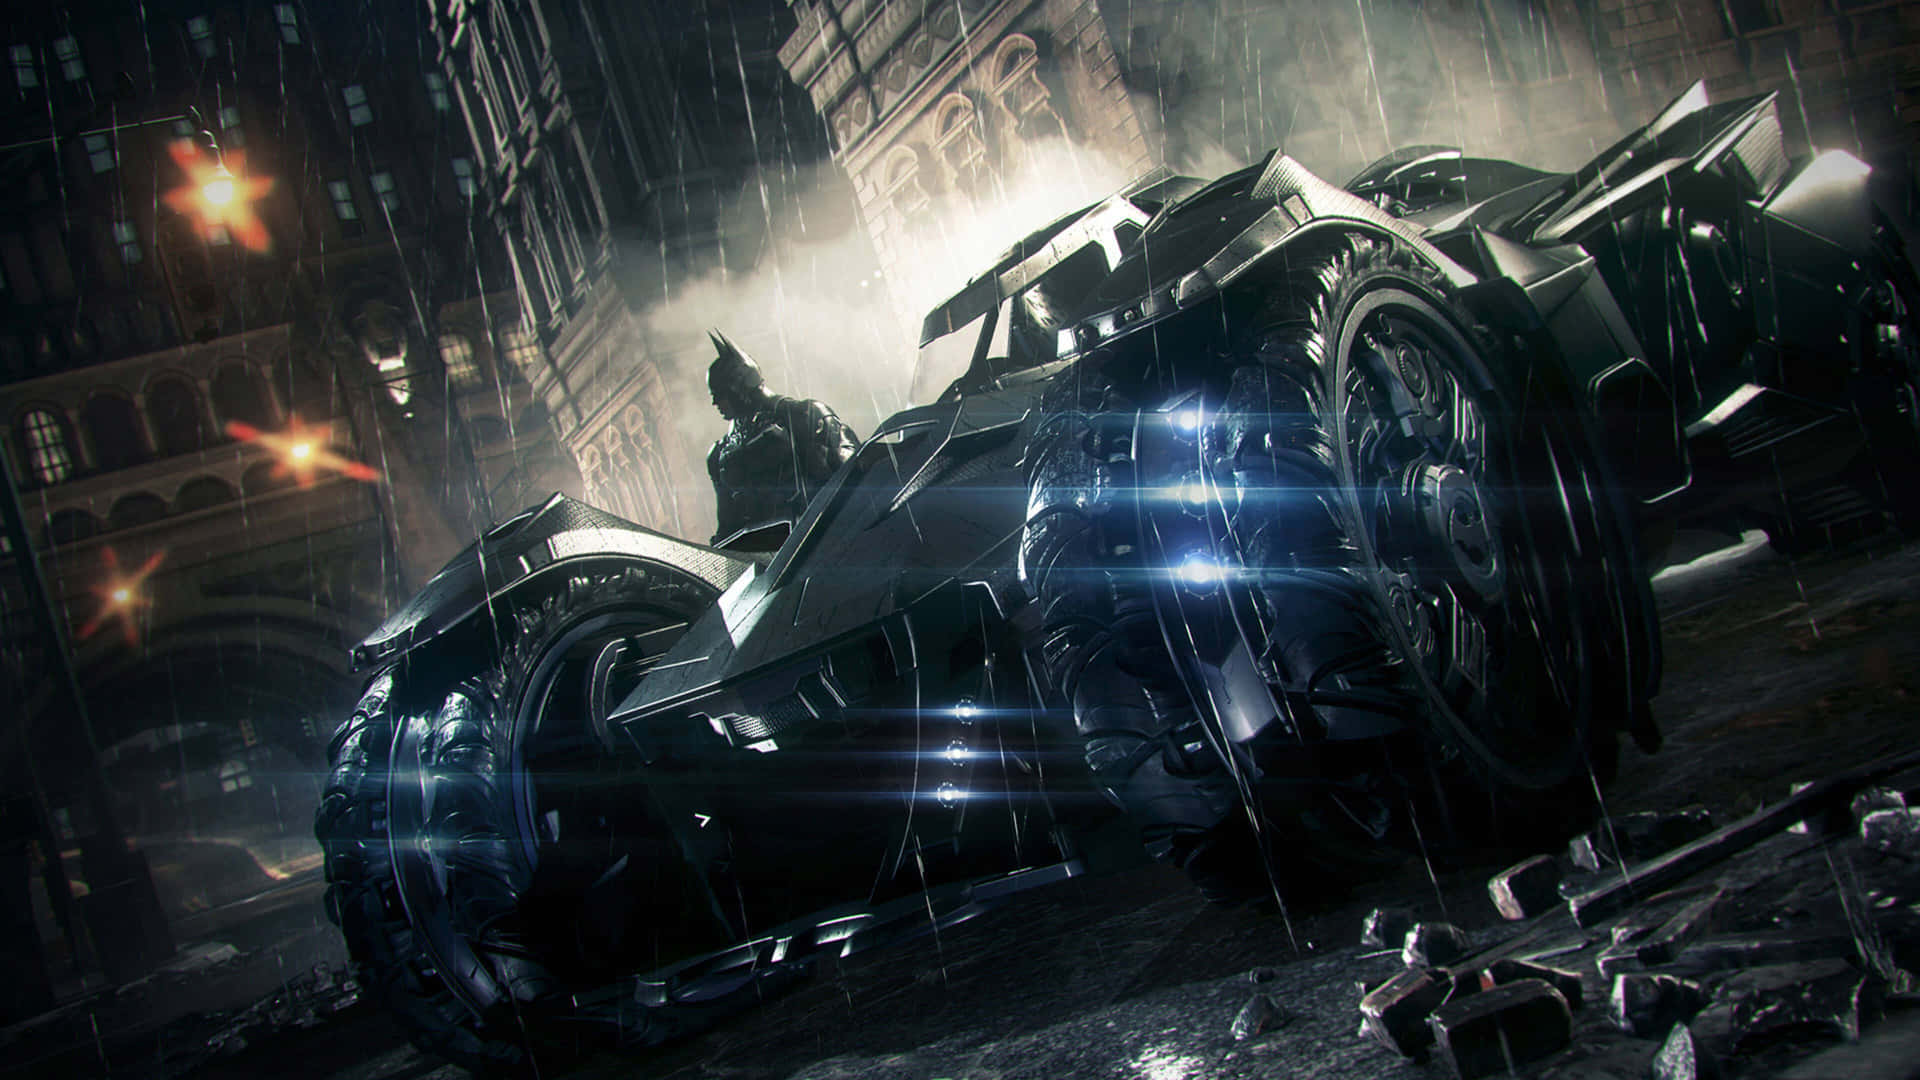 Show off your superhero fandom with this 4K Batmobile background!